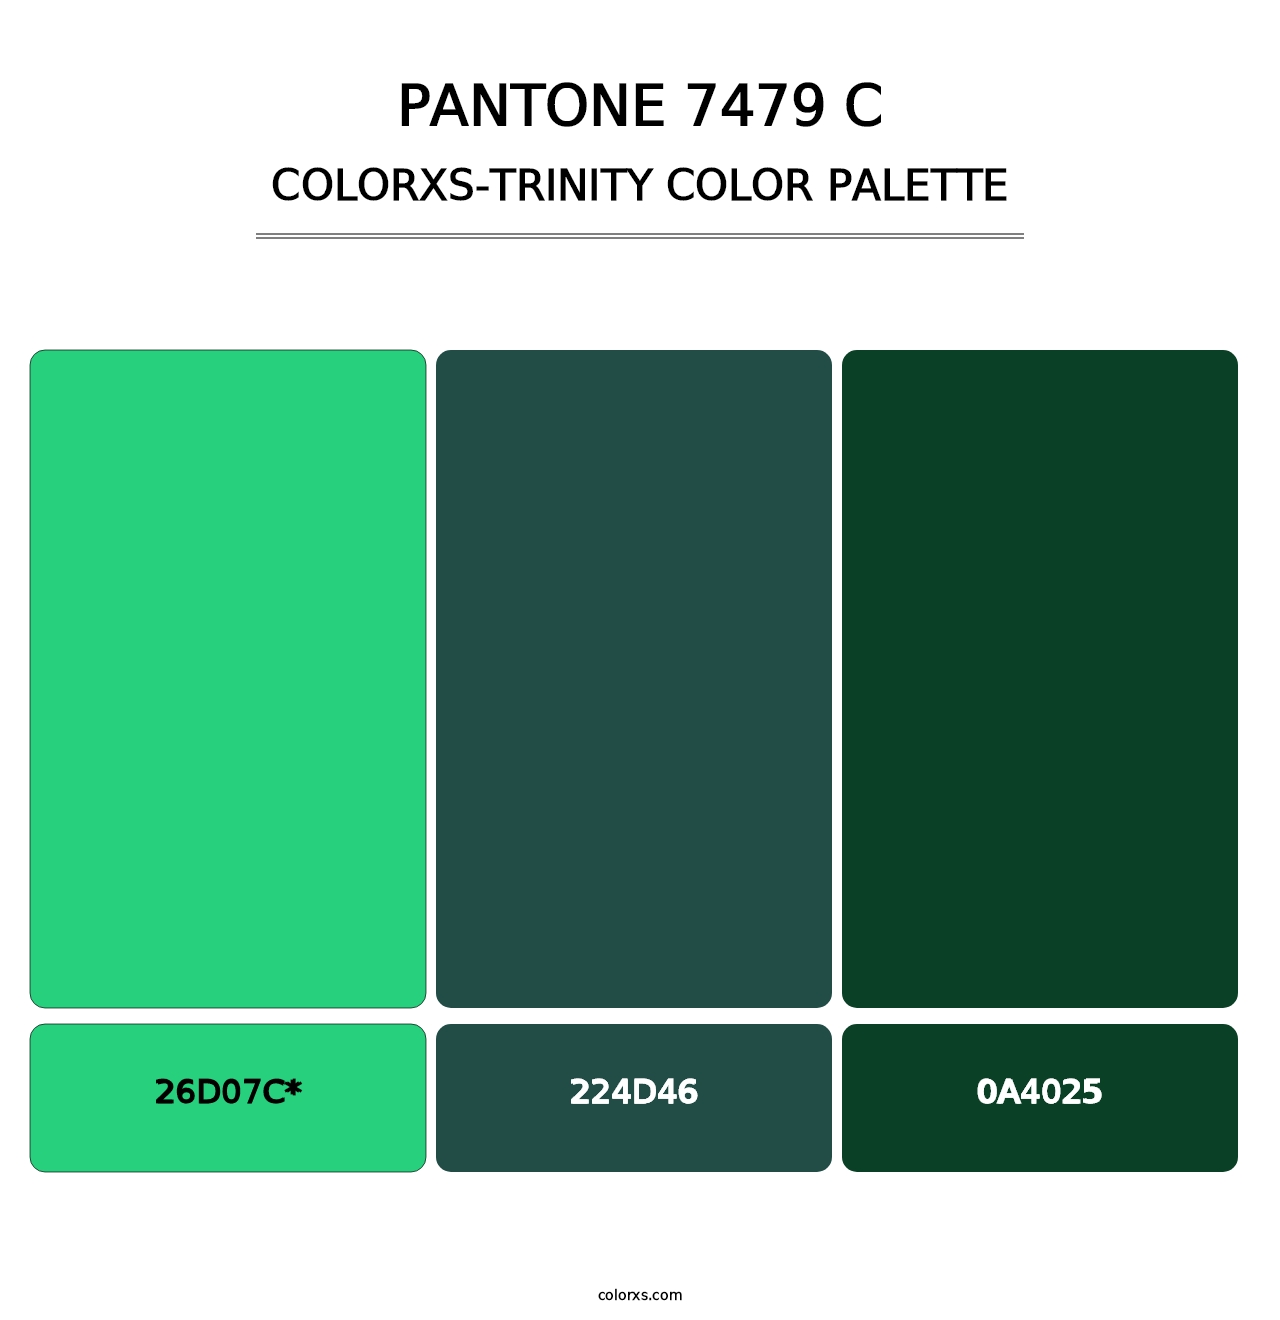 PANTONE 7479 C - Colorxs Trinity Palette